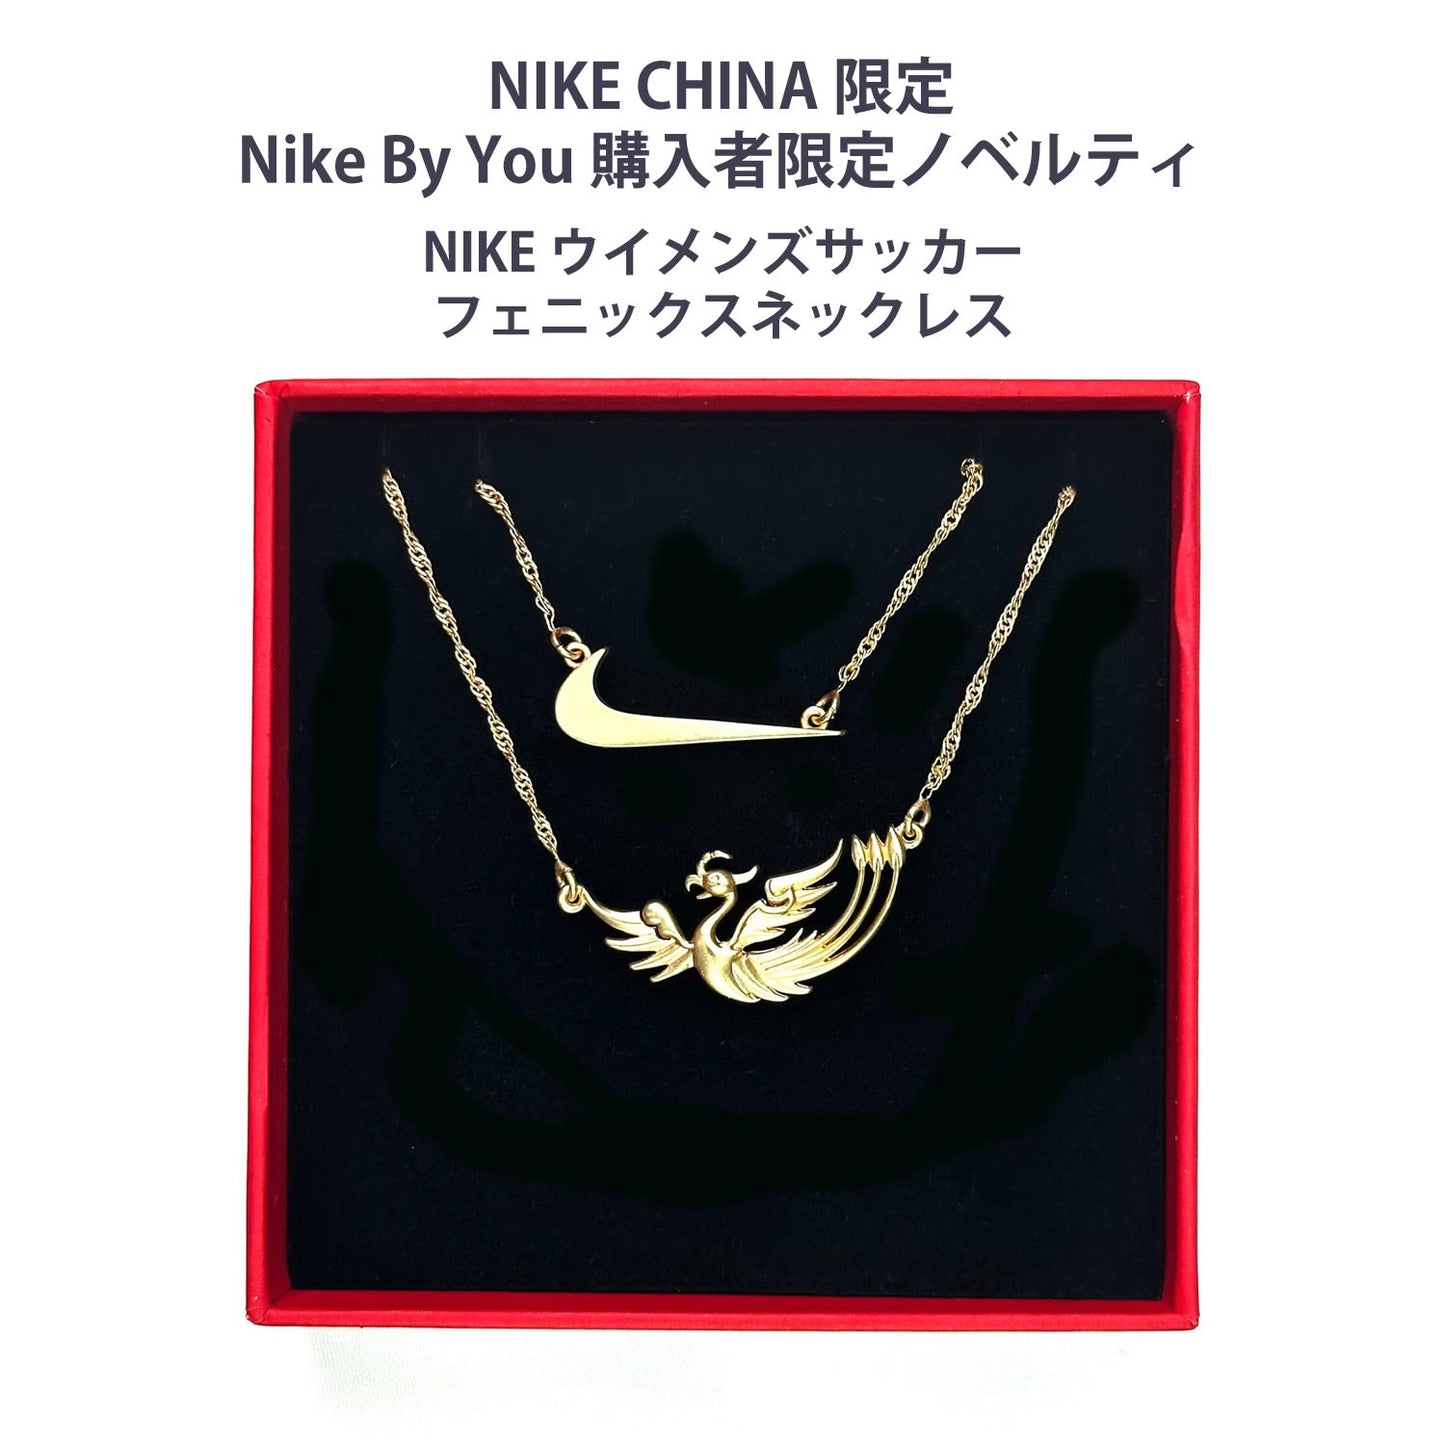 NIKE CHINA限定 非売品 Nike By You カスタムアイテム 購入者限定ノベルティ NIKEウイメンズサッカー フェニックスネックレス